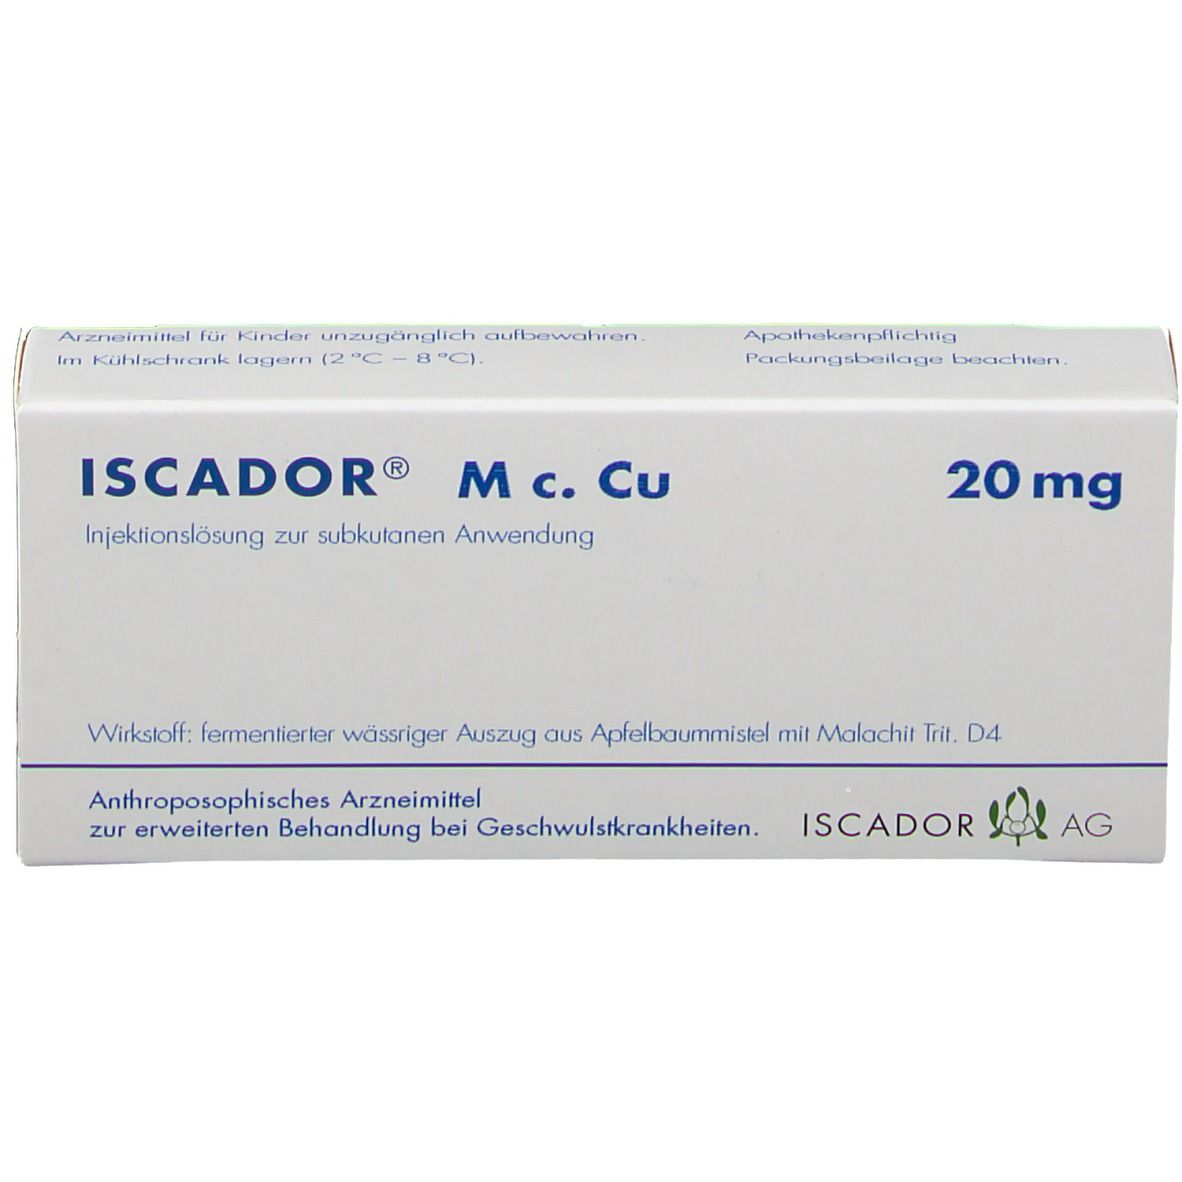 ISCADOR® M c. Cu 20 mg